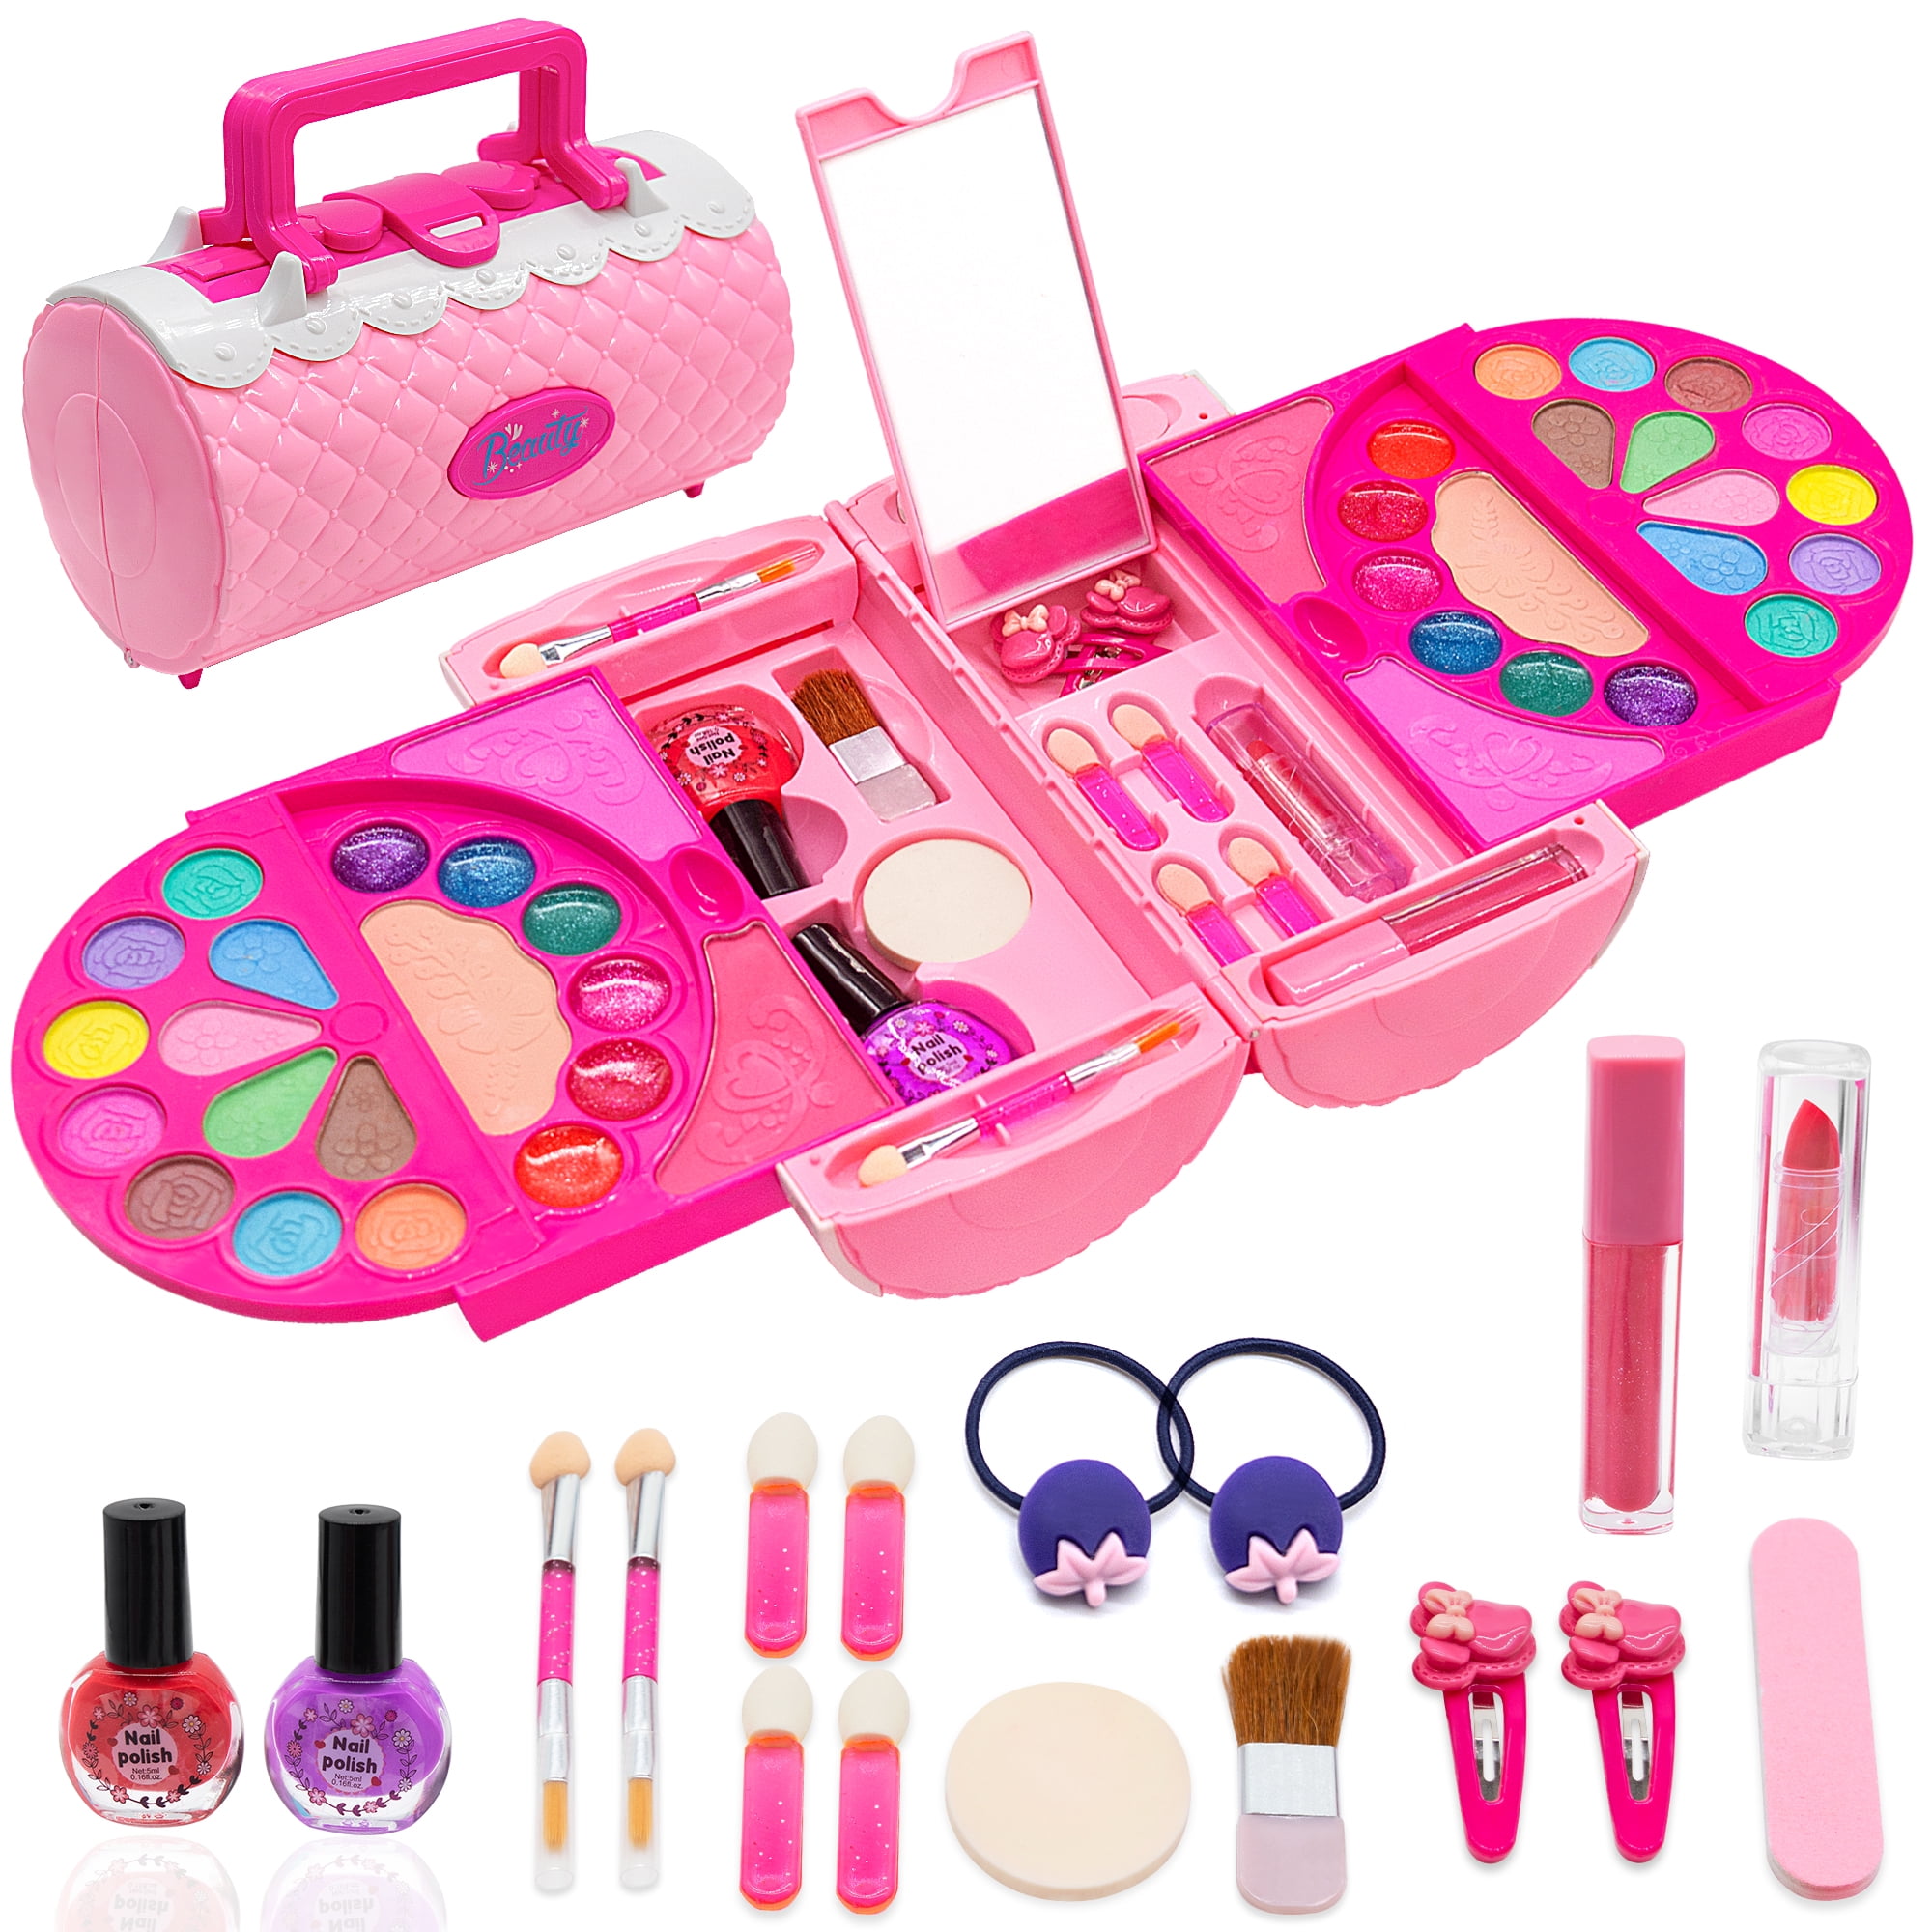 Kids Makeup Kit for Girls, Washable Makeup Set Toy, Angola